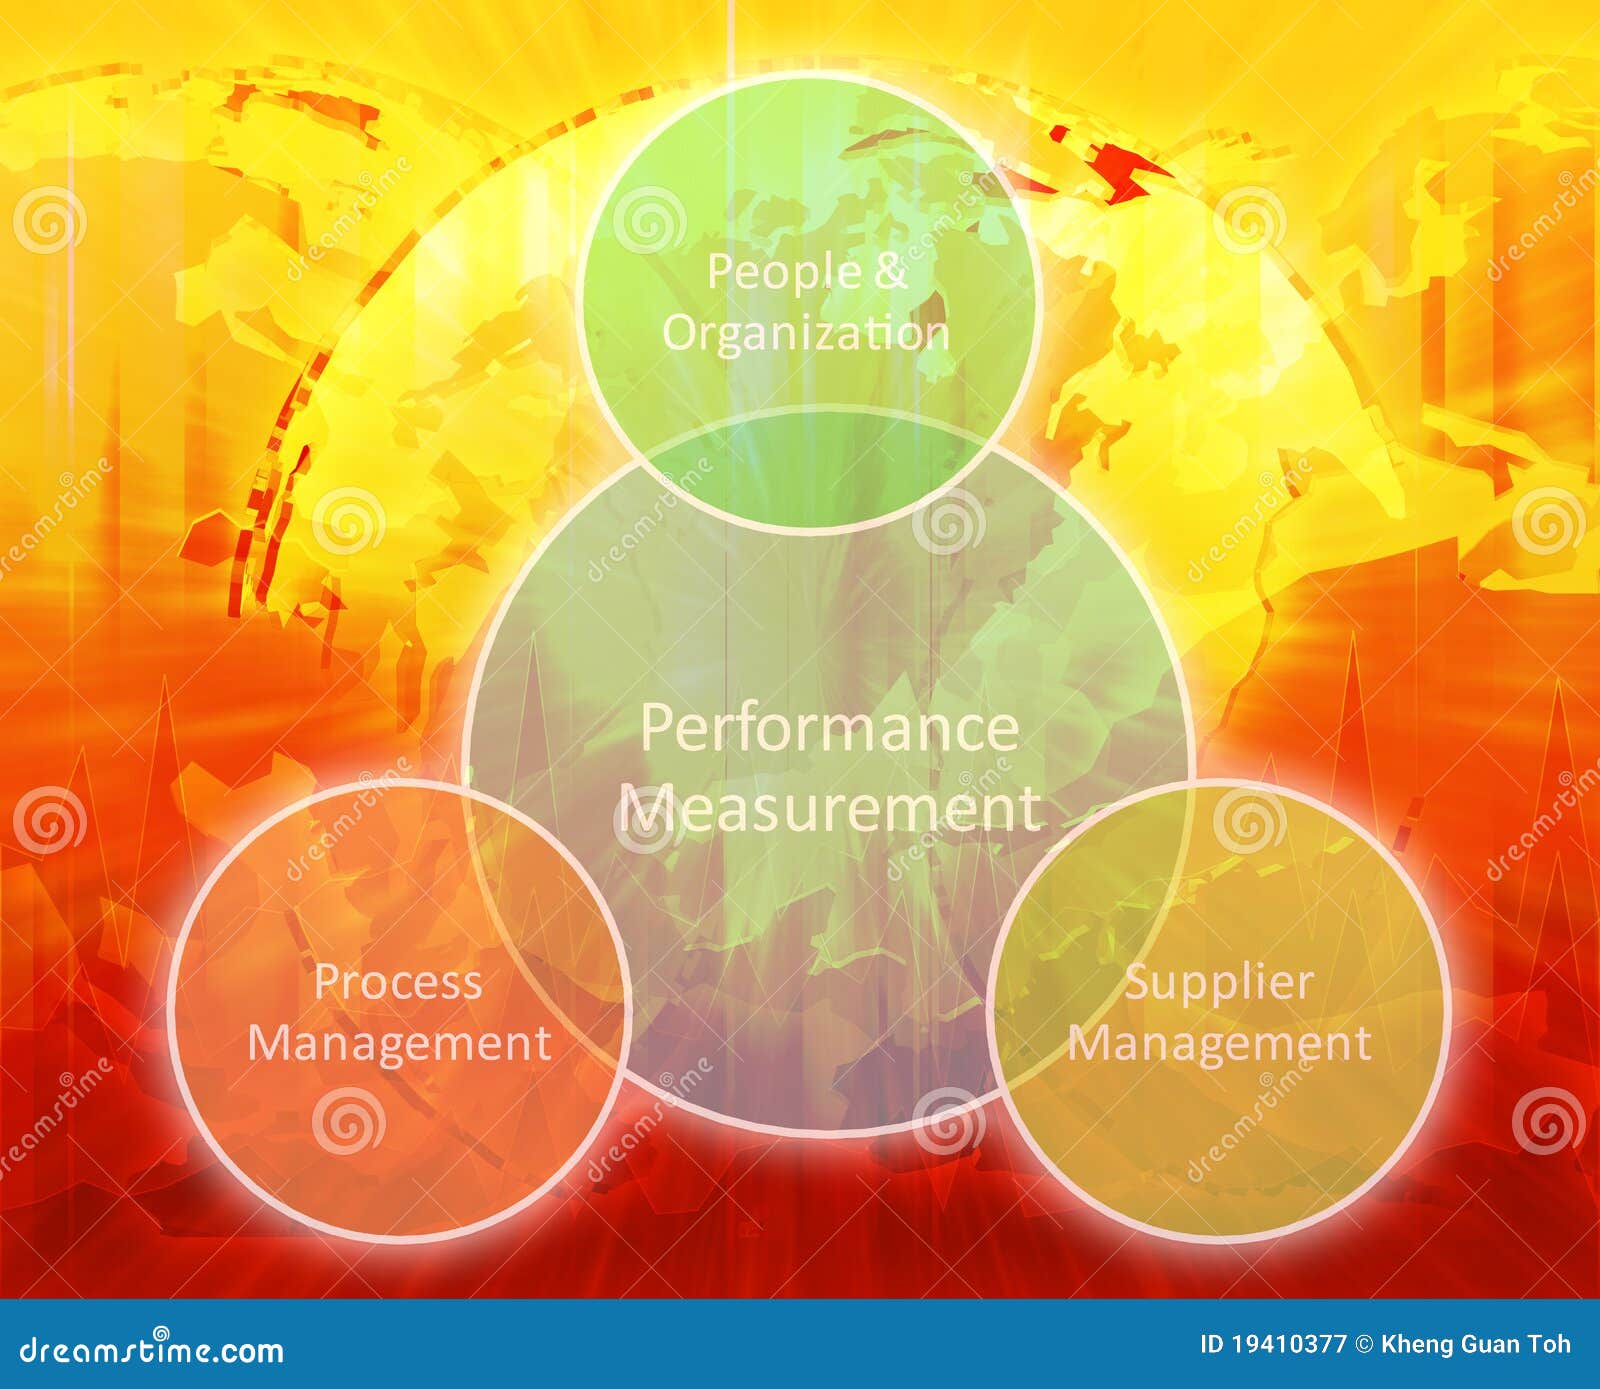 performance measurement business diagram